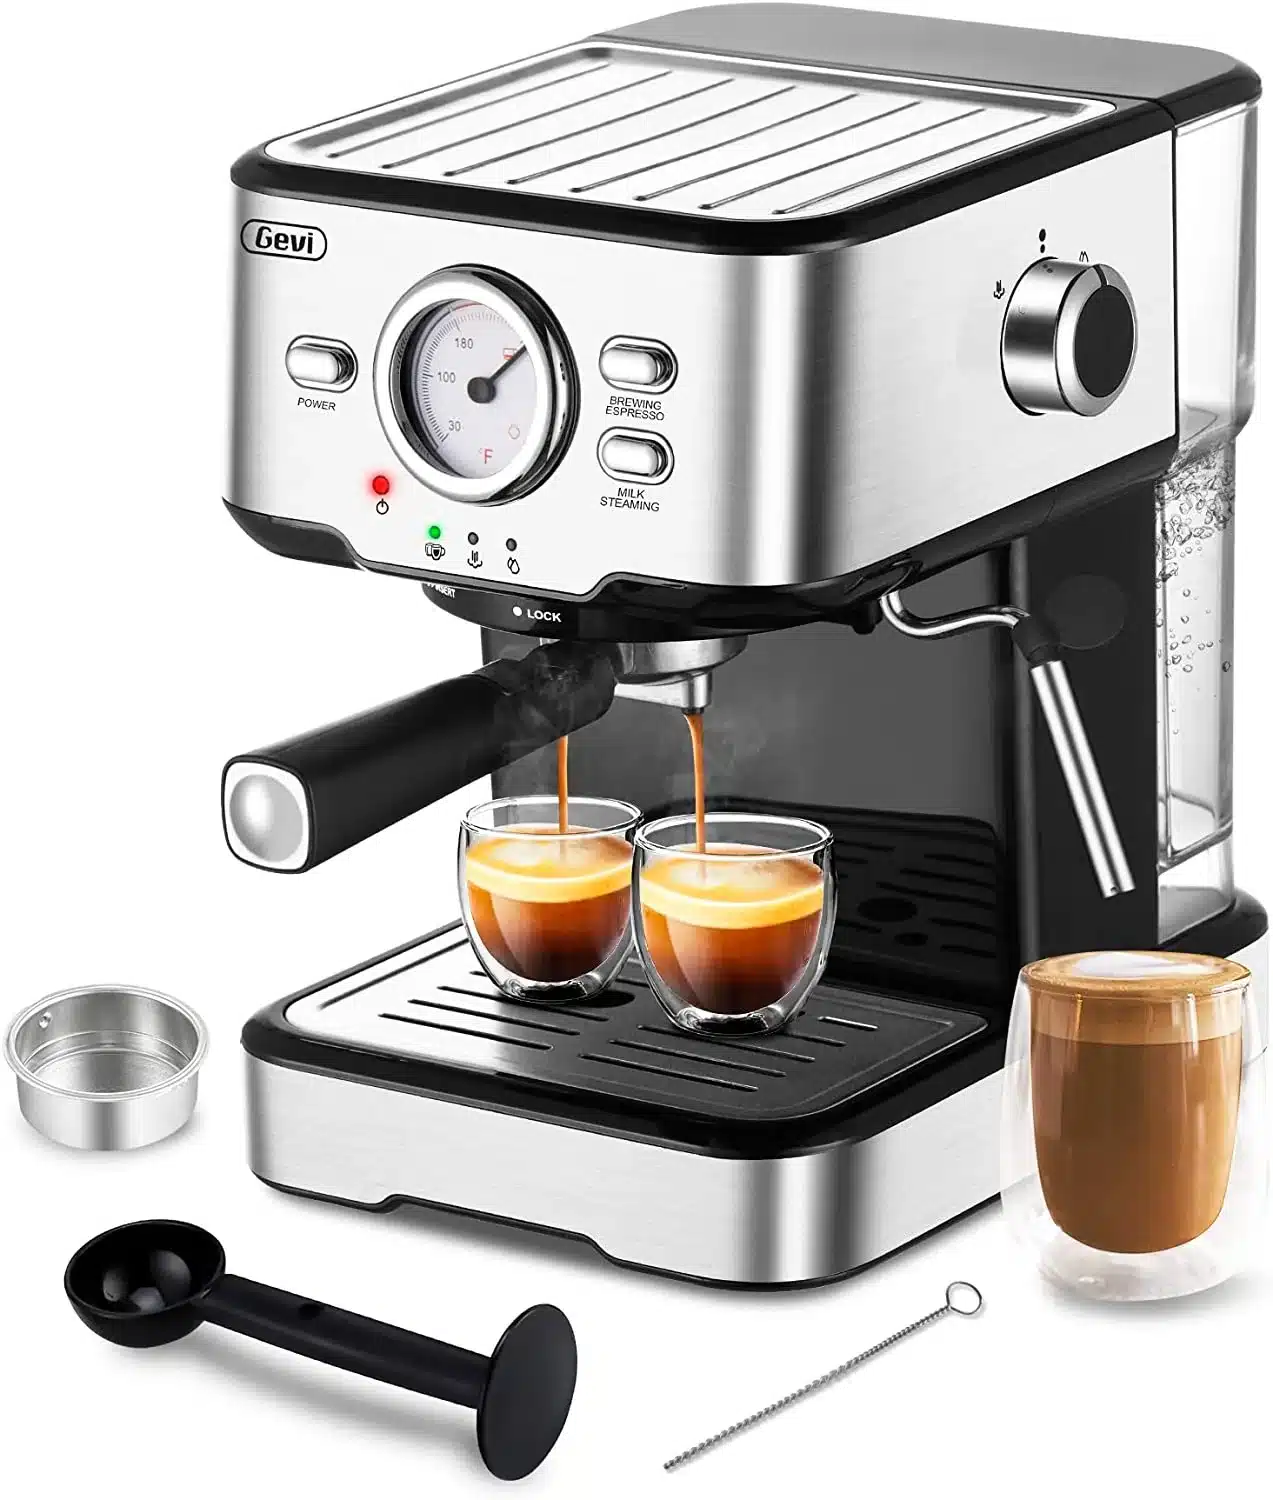 Gevi 5403 Model Espresso Coffee Maker Machine